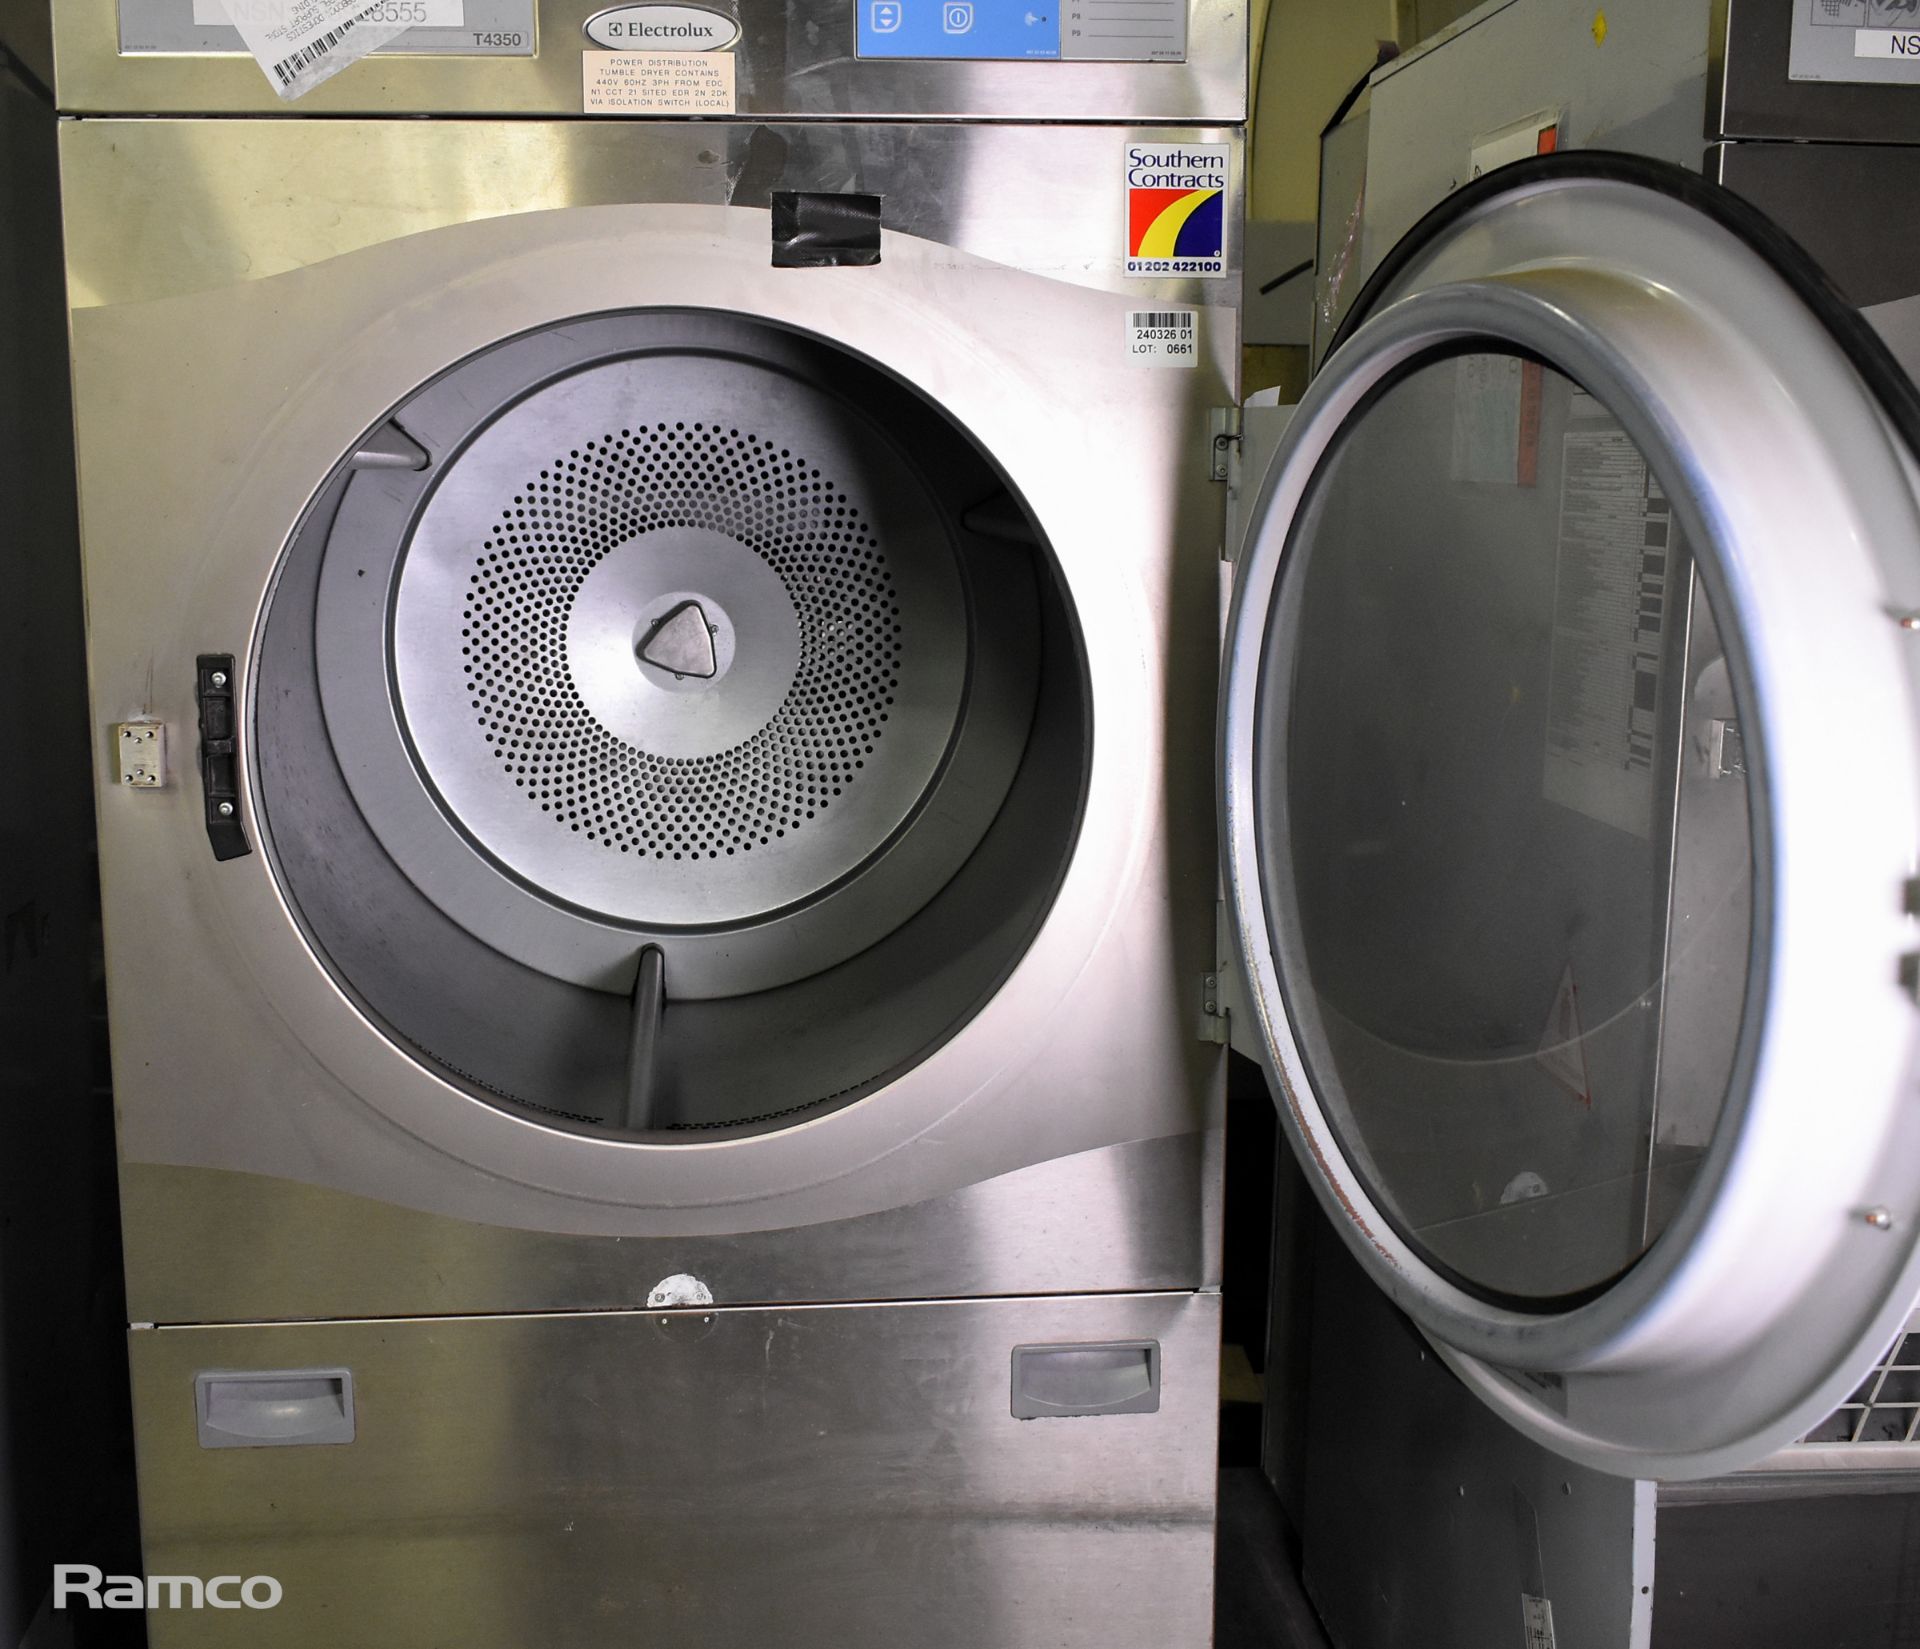 Electrolux T4350 professional tumble dryer - 349 litre drum volume - 3 phase 440V 60Hz - Image 3 of 7